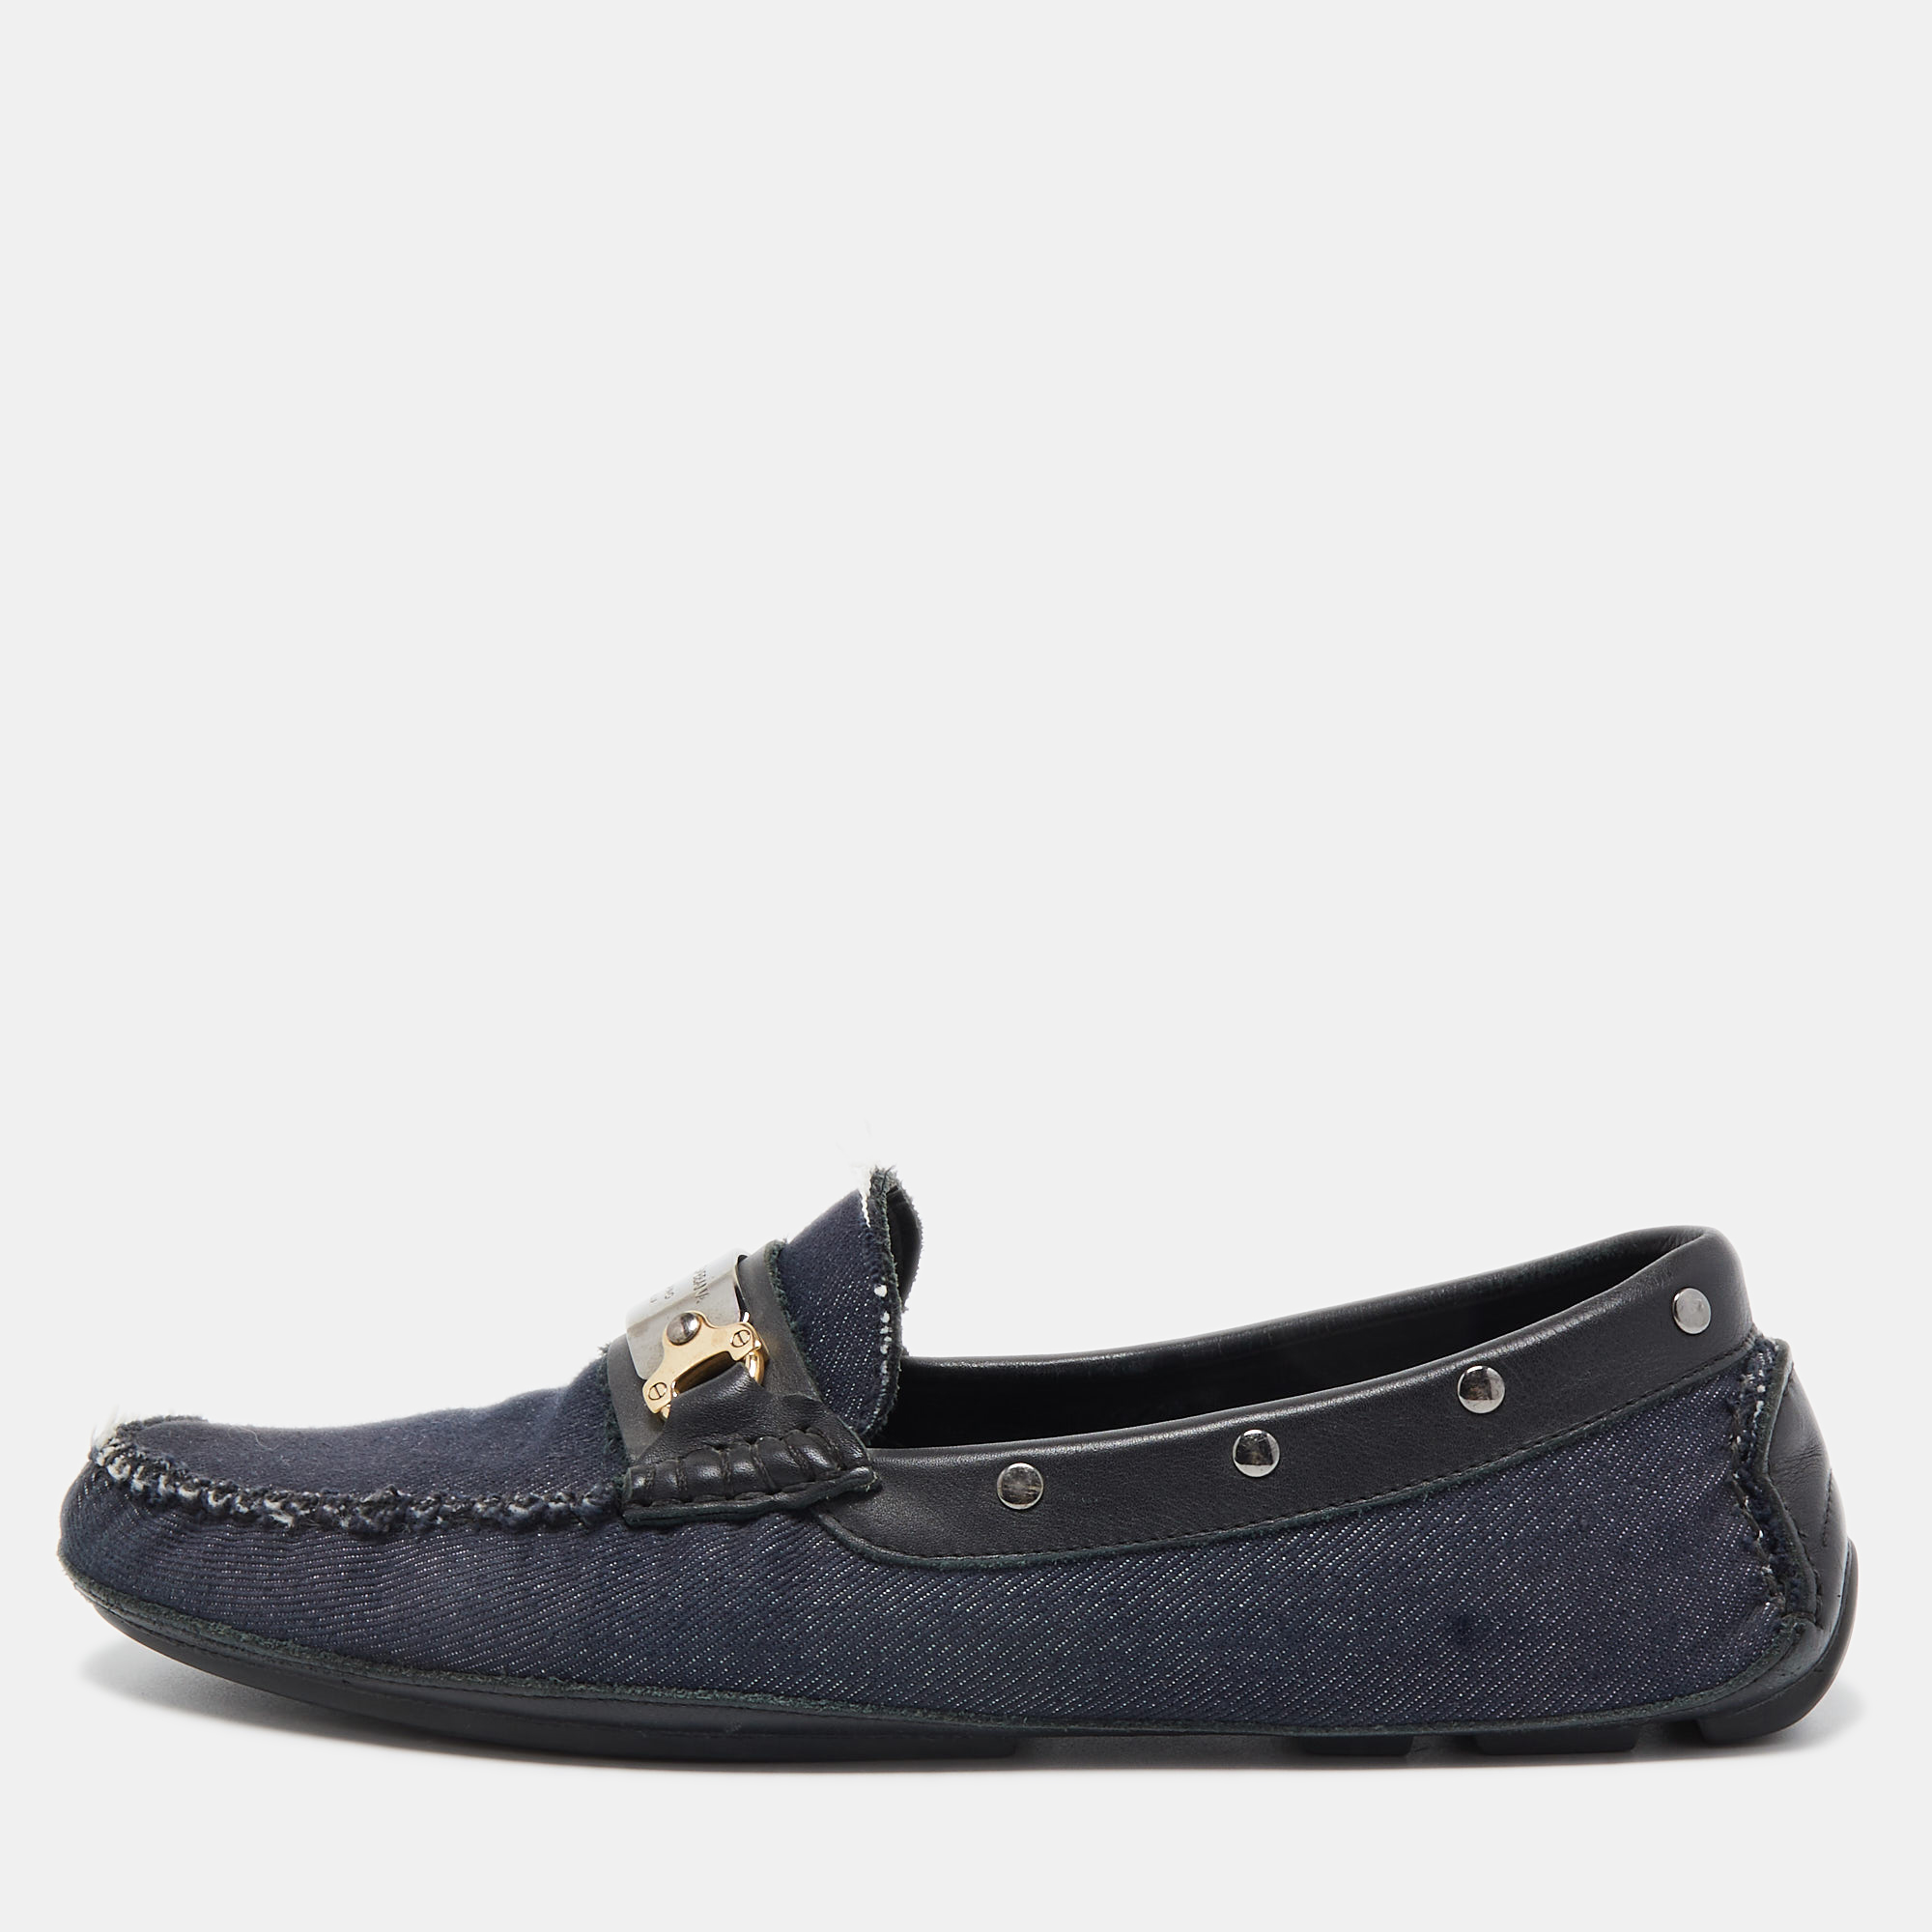 Dolce & Gabbana Navy Blue/Black Denim And Studded Leather Loafers Size 40